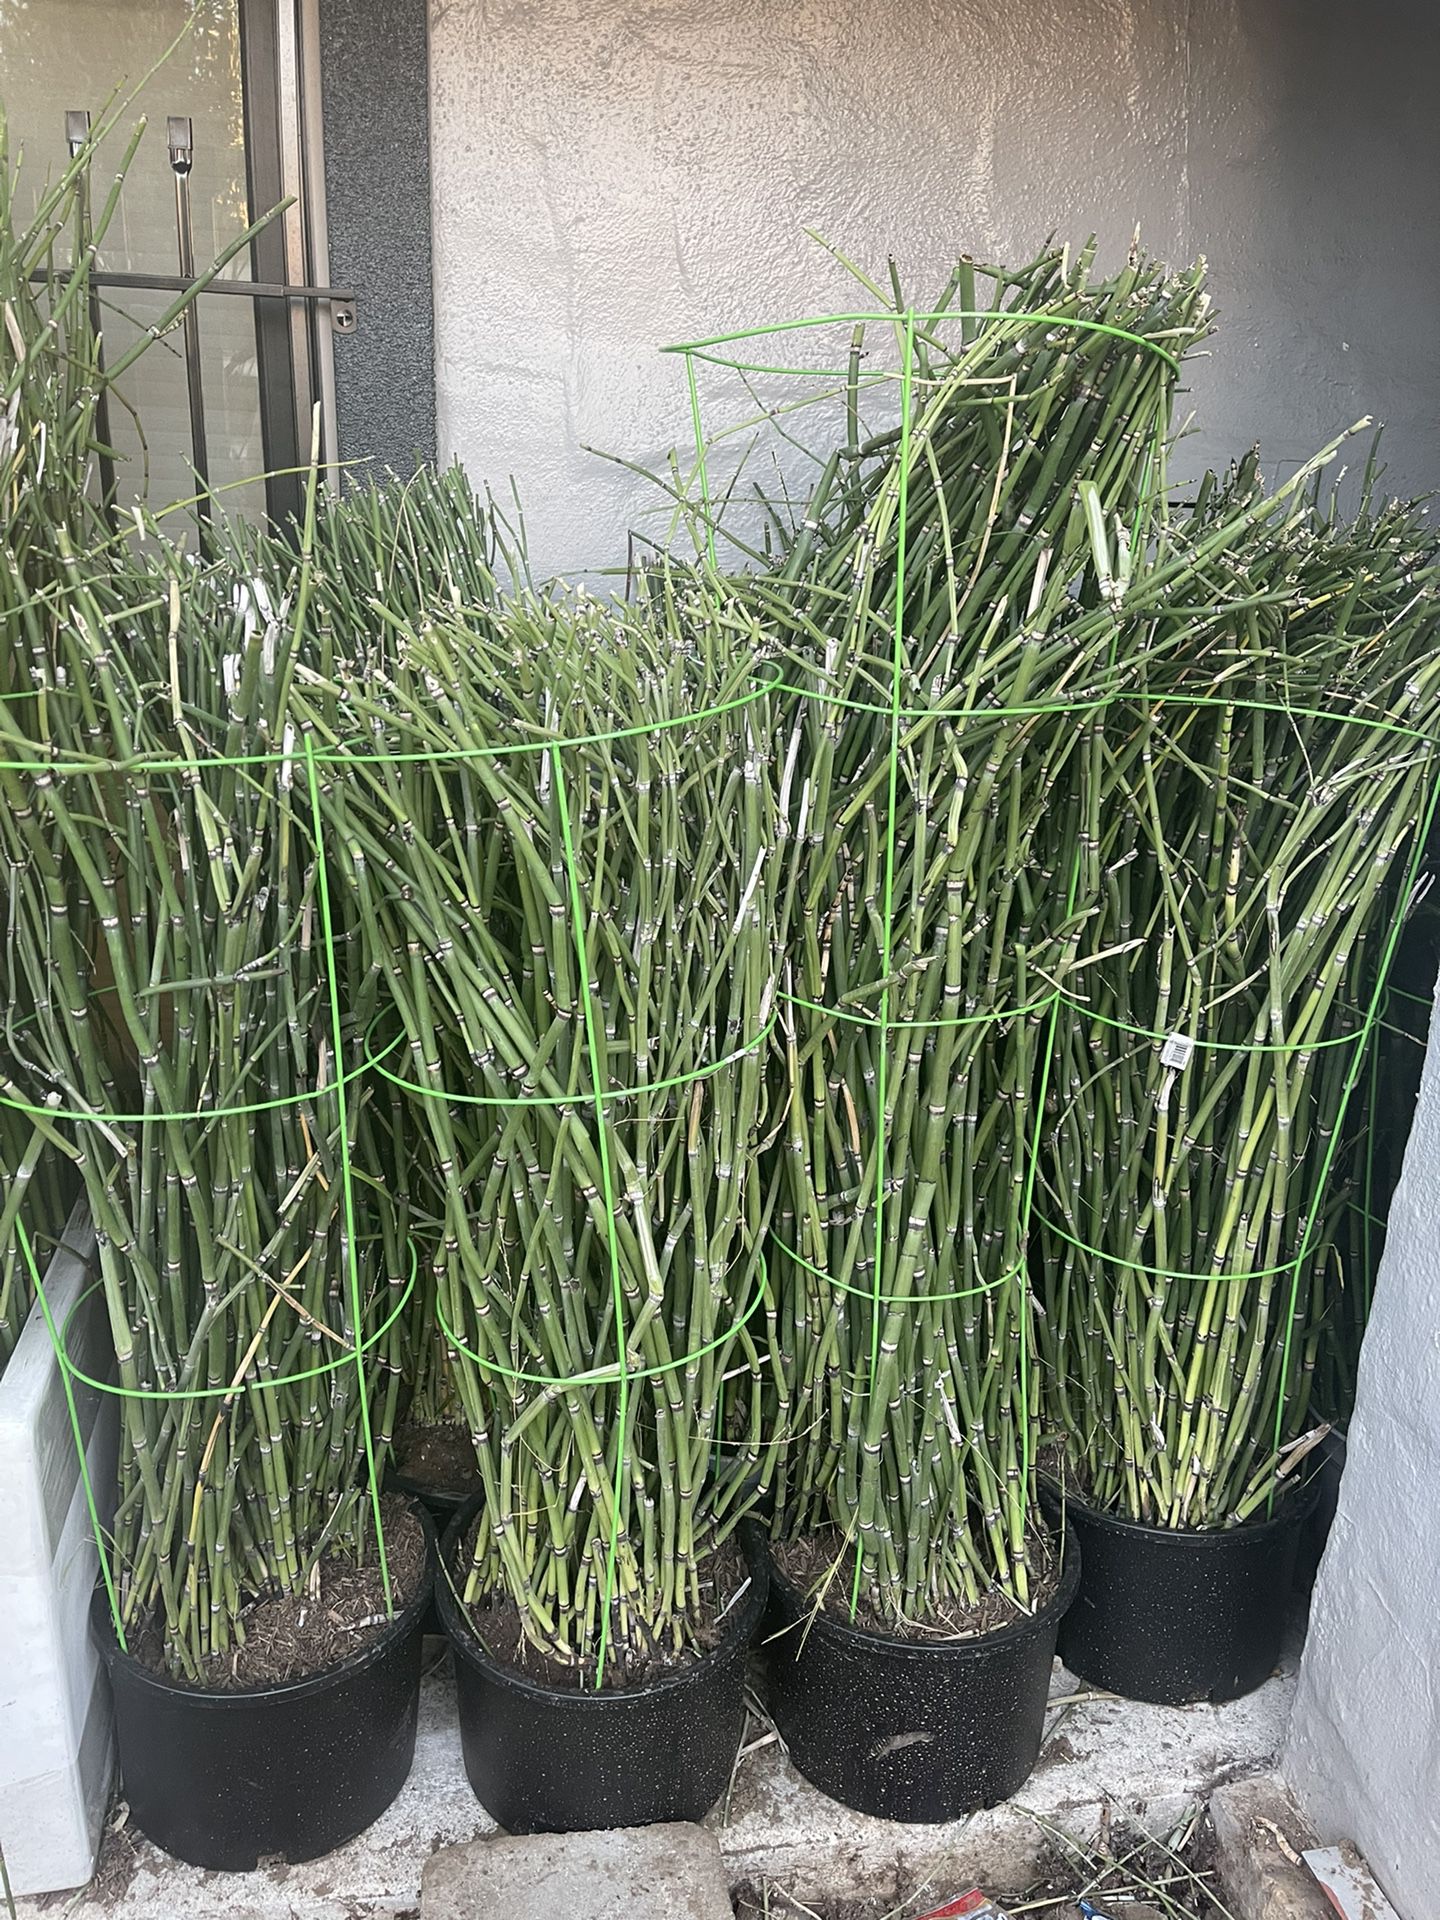 Euphorbia Antisypphilitica / Bamboo / For Sale  $10.00